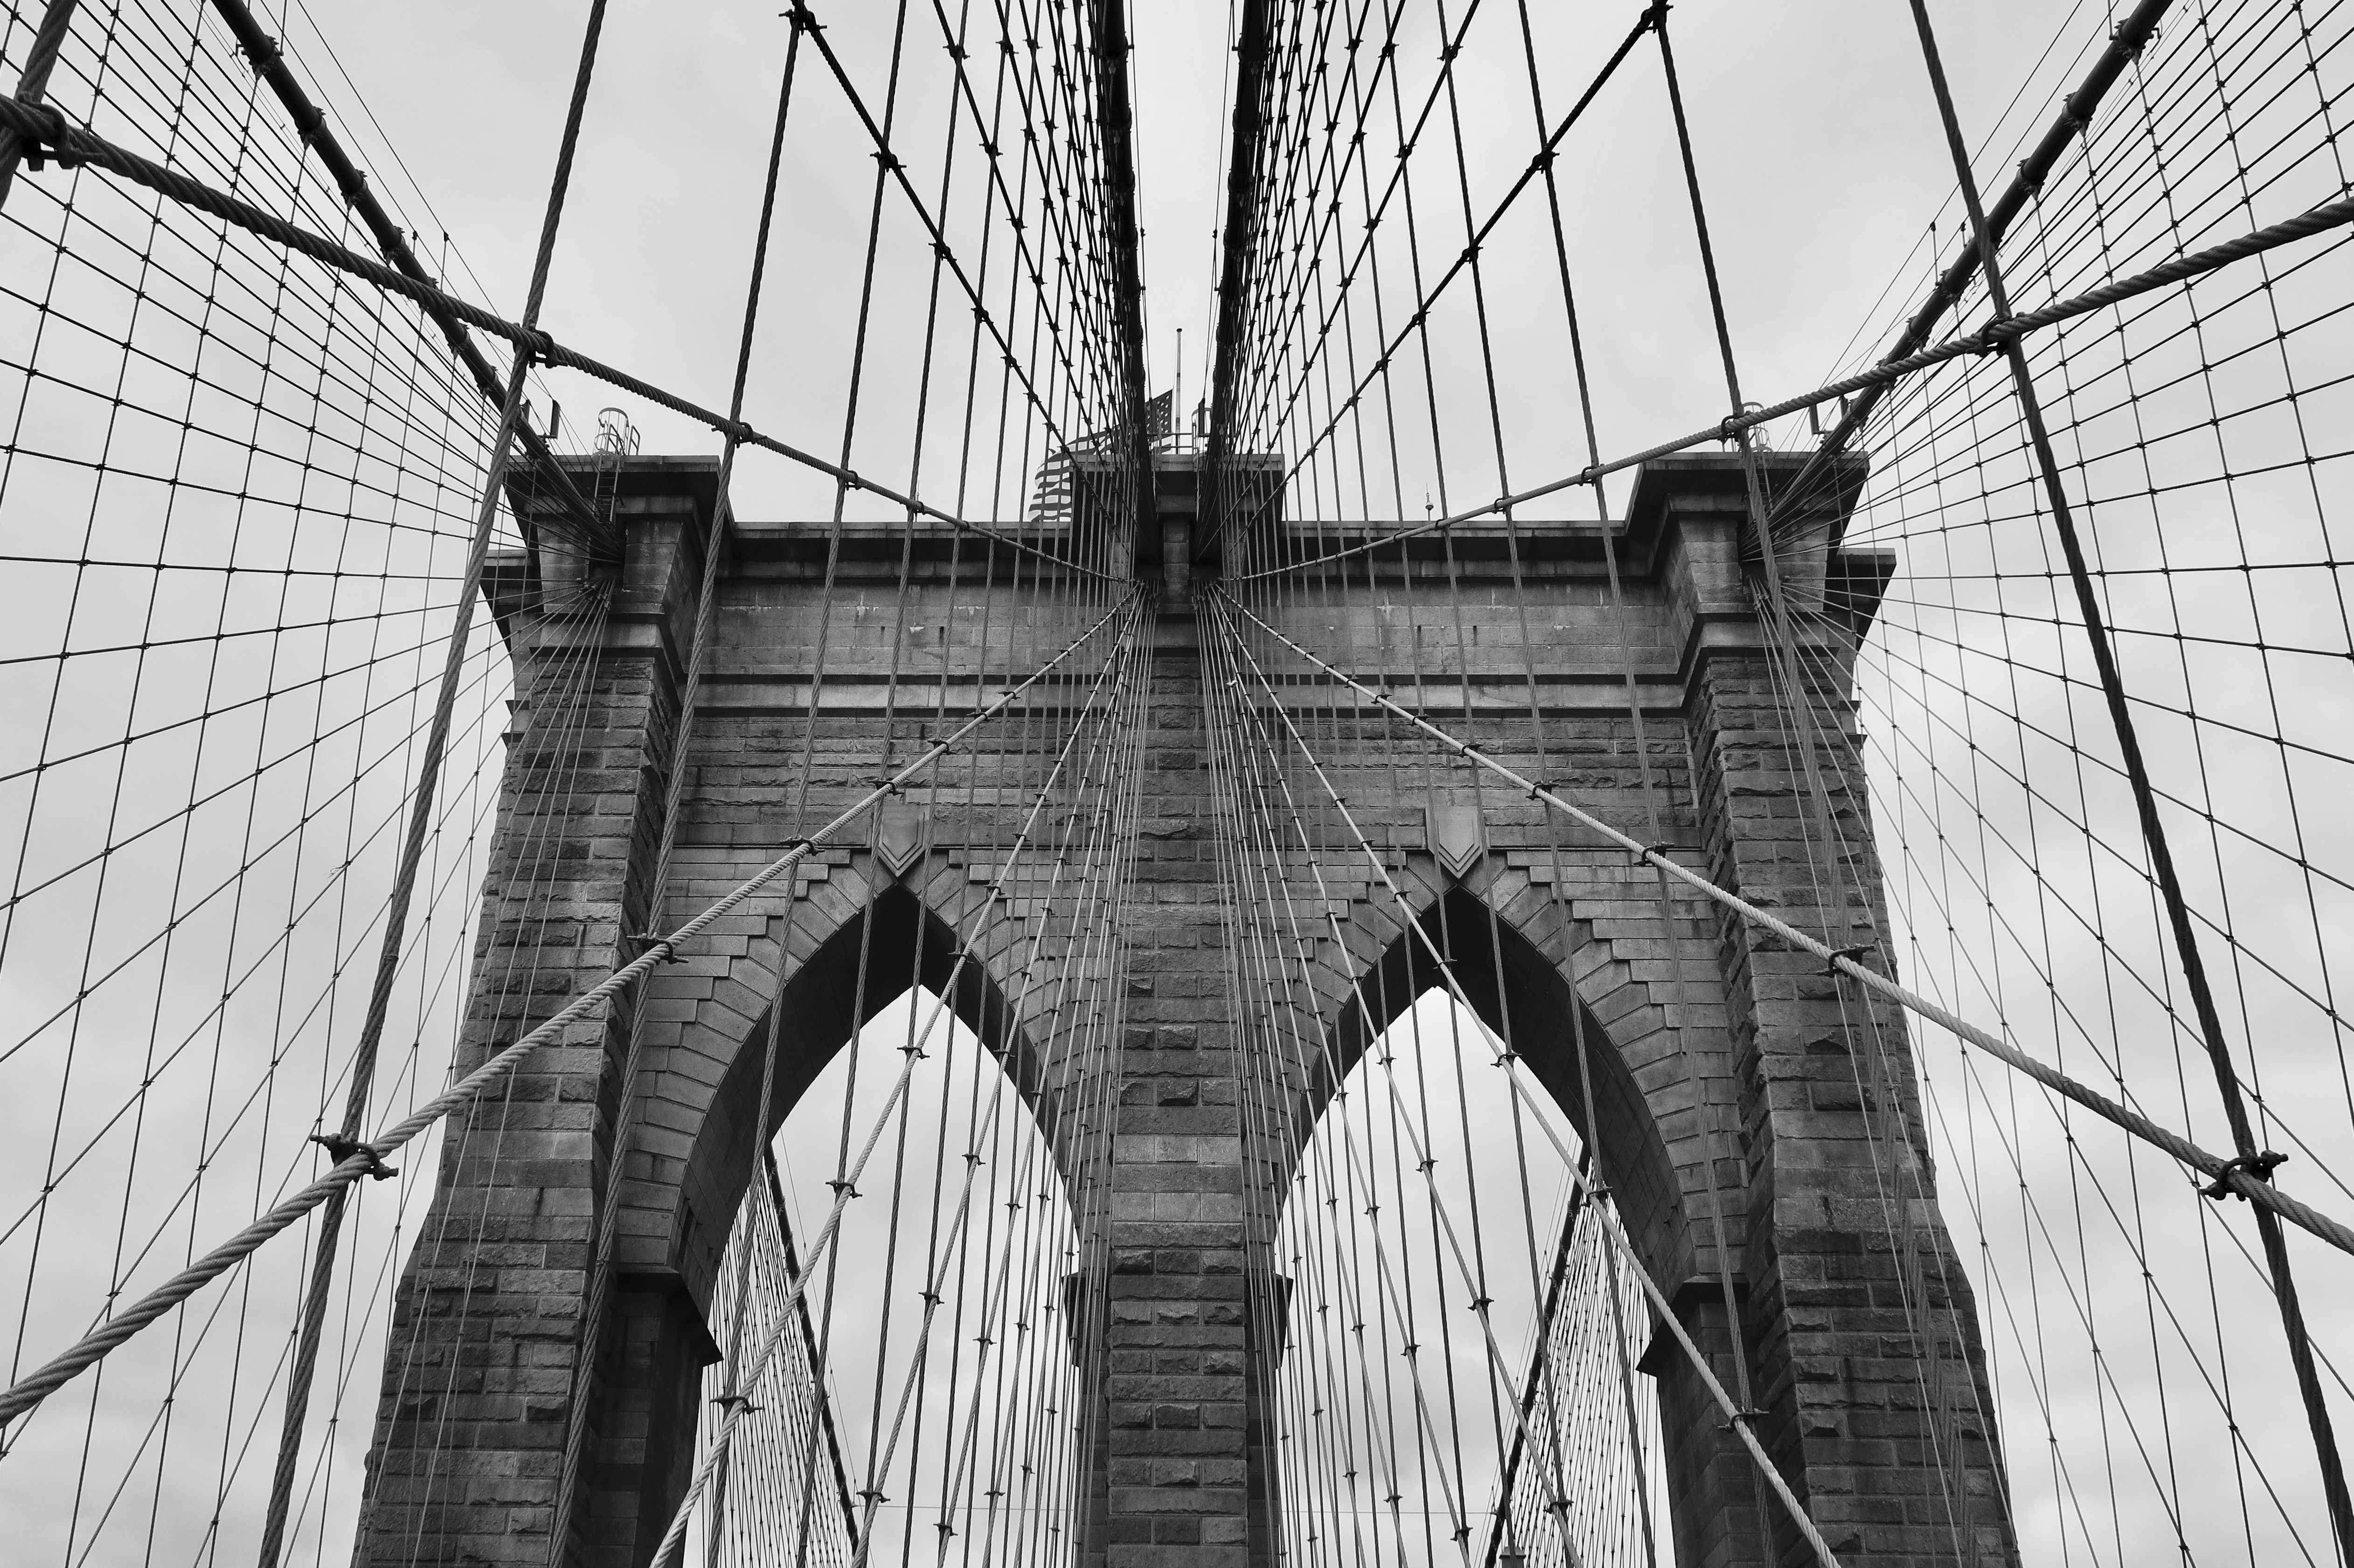 The Brooklyn Bridge. Image by Yue Yin Leong. United States, undated.